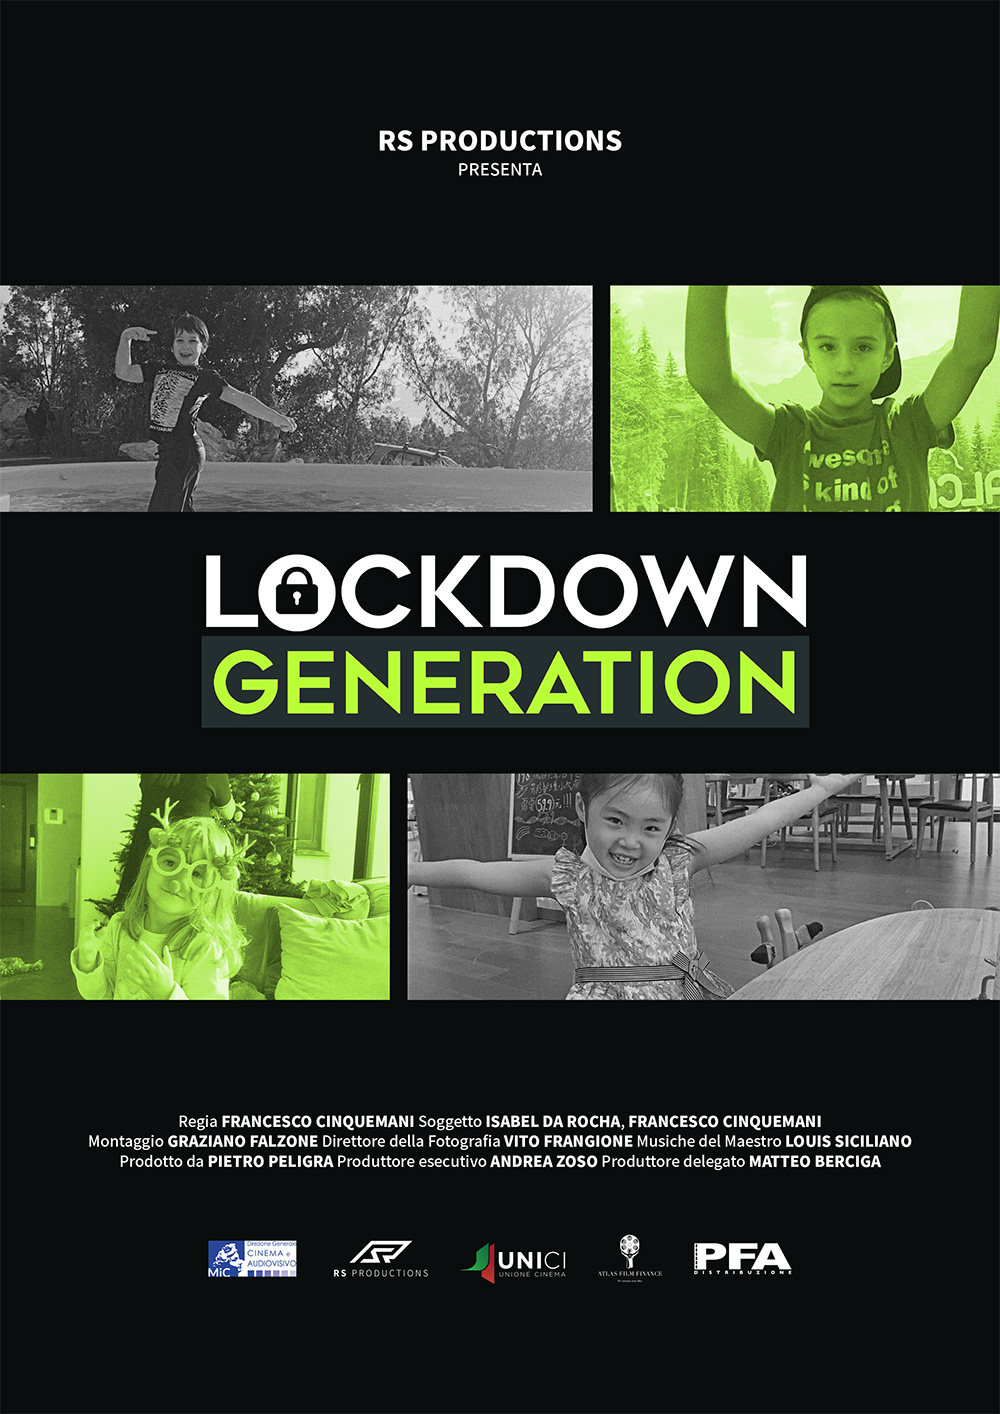 Lockdown generation